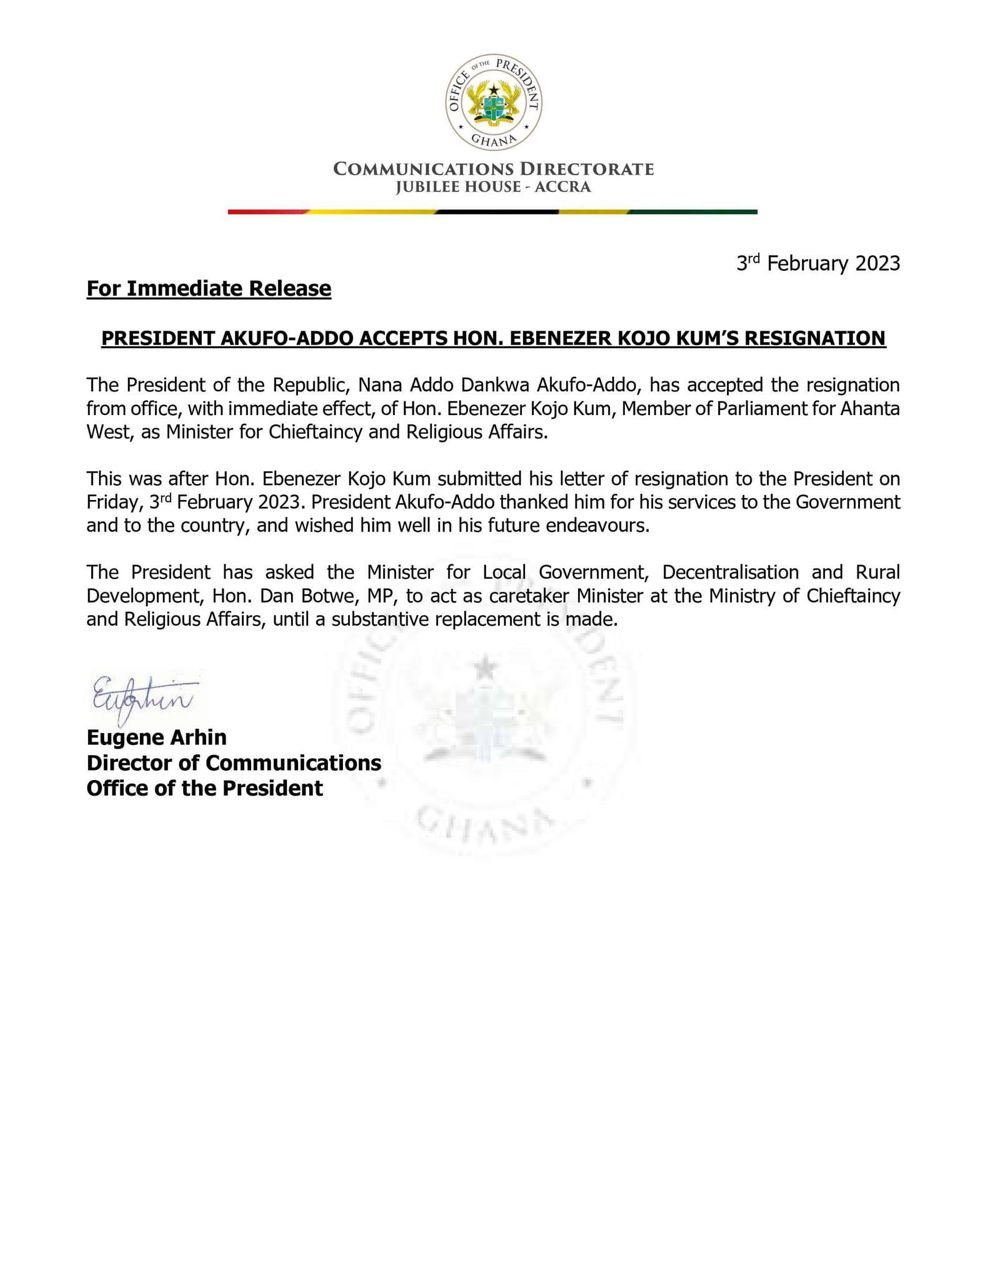 Chieftaincy Minister, Ebenezer Kojo Kum resigns